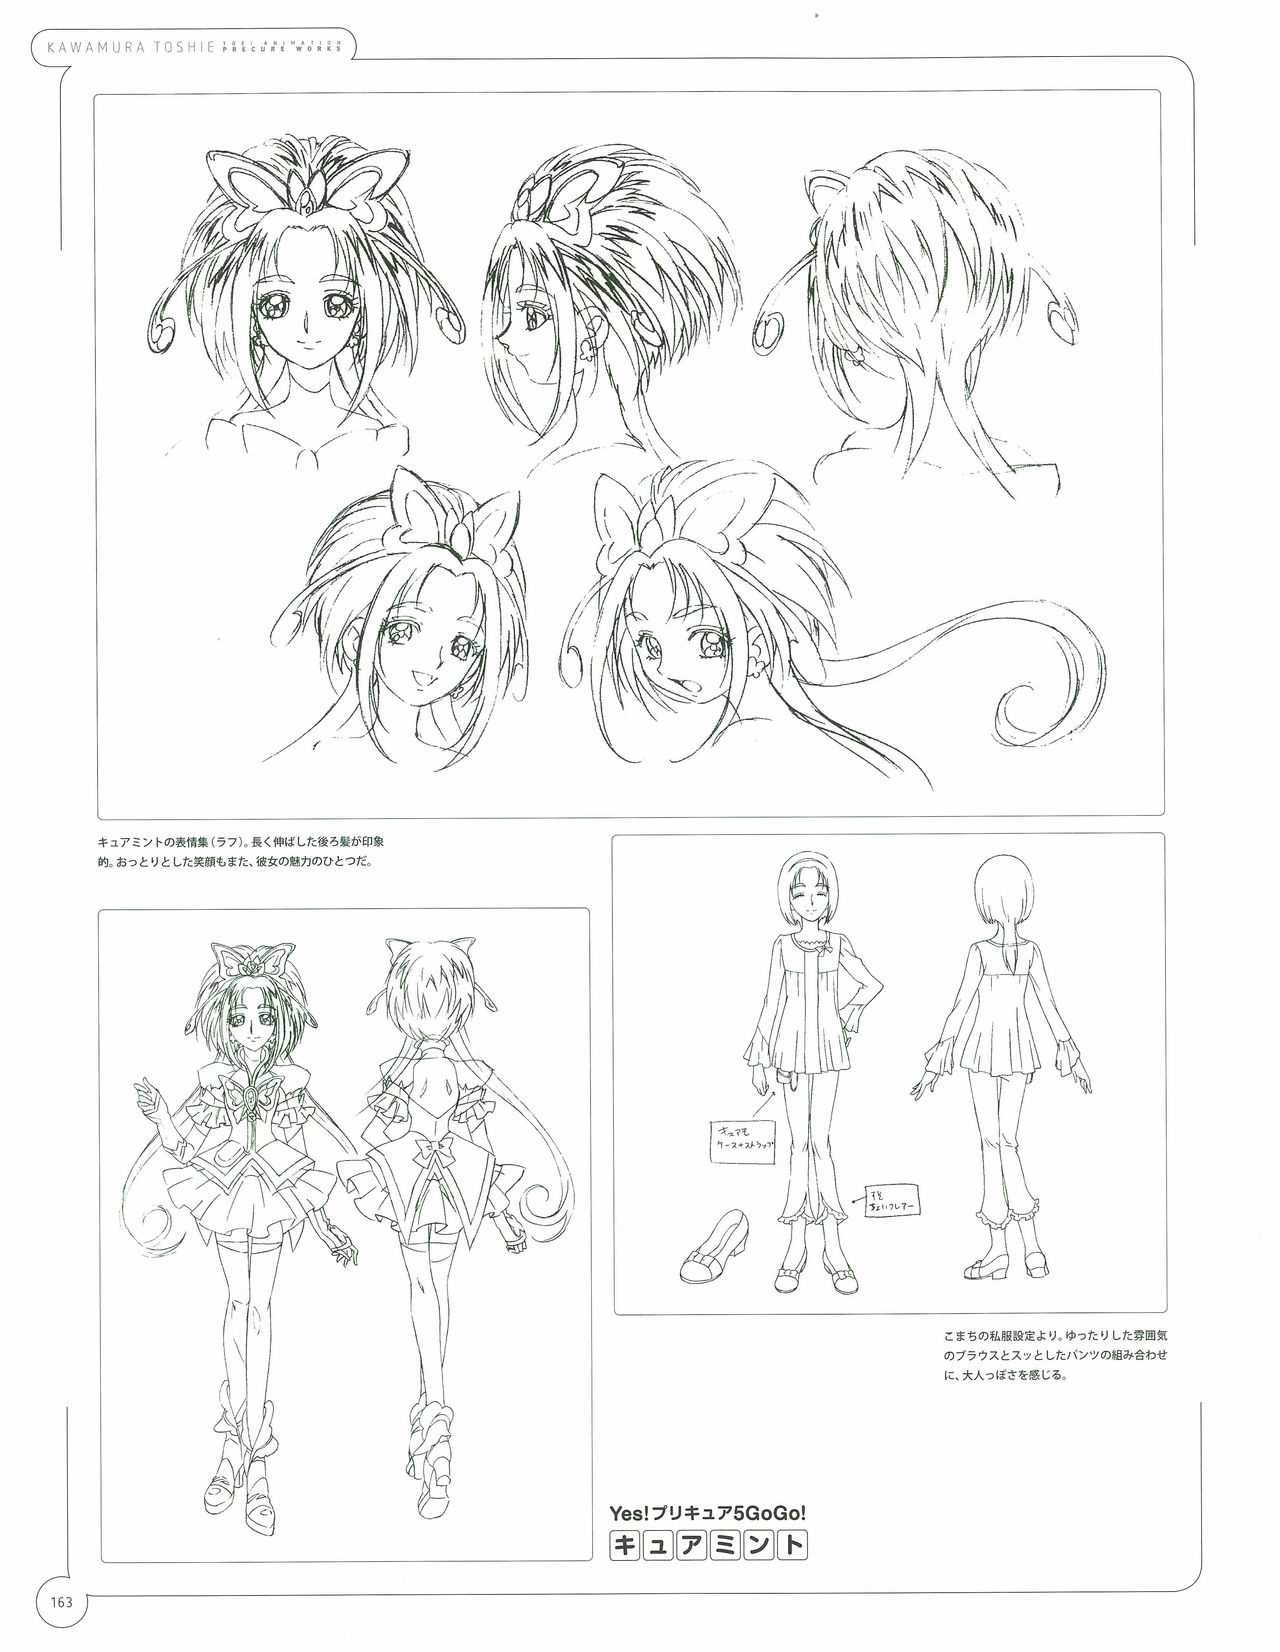 Kawamura Toshie - Toei Animation Precure Works 163